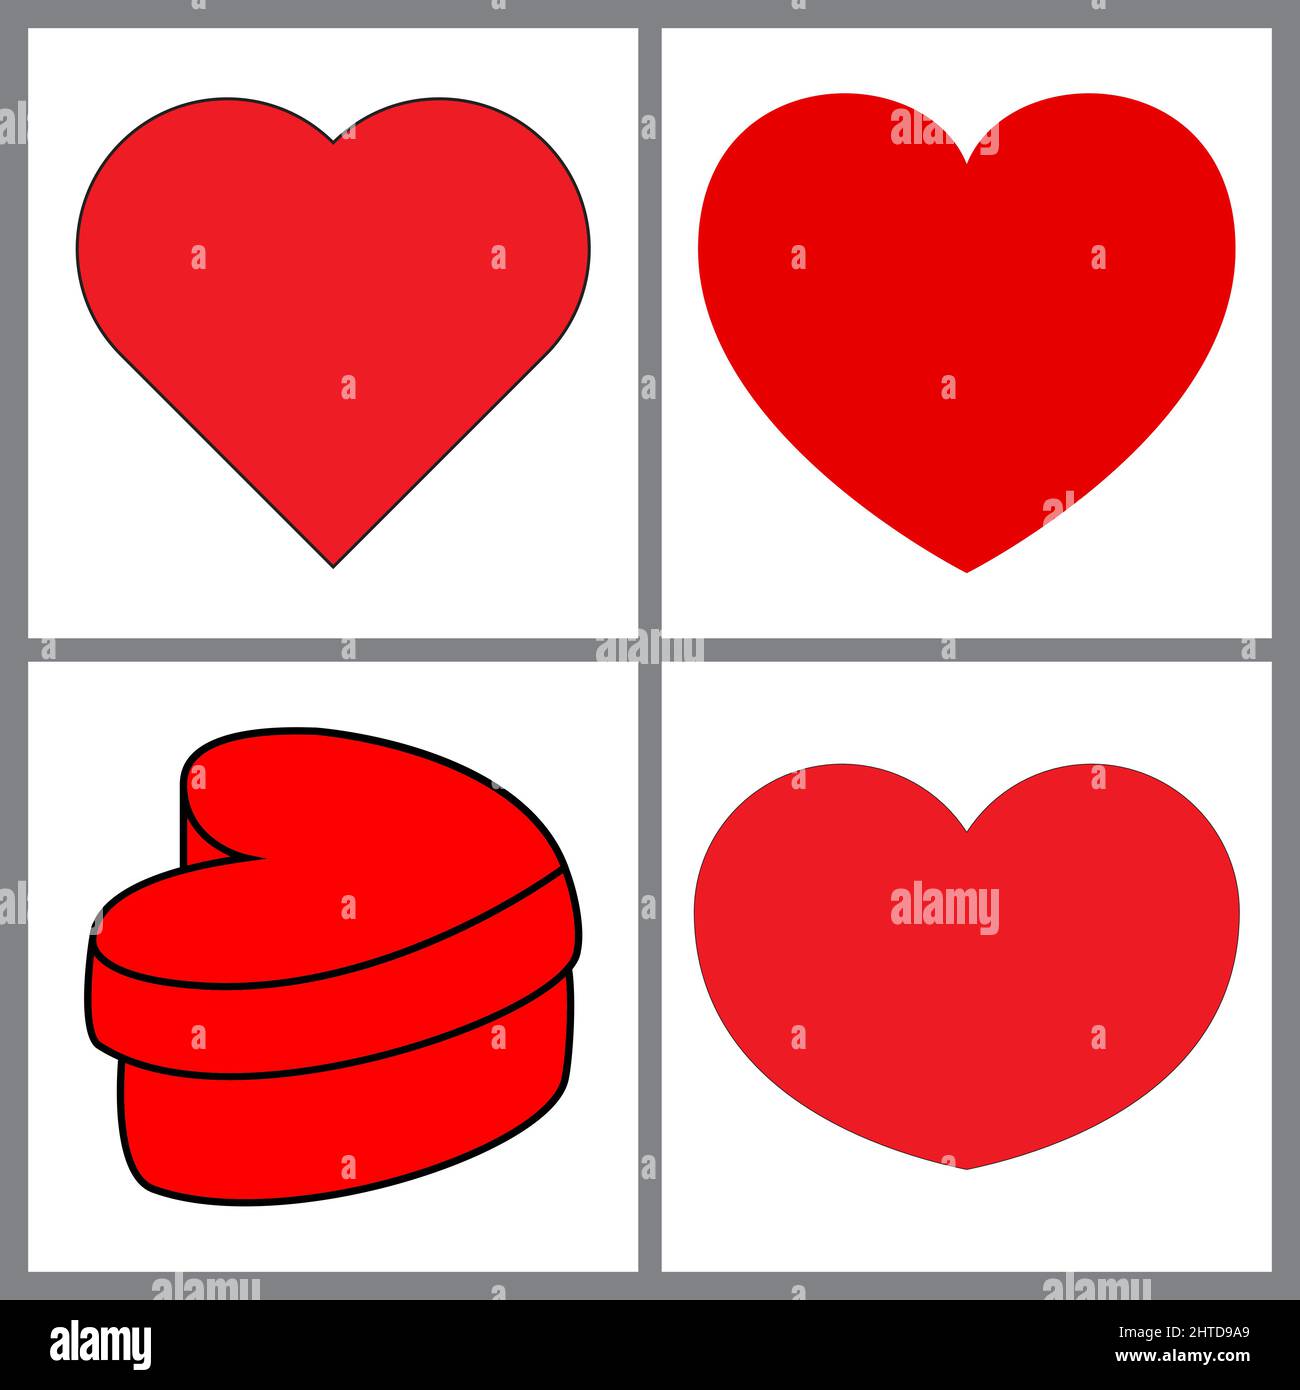 heart shape for love symbols vector cartoon set illustration isolated on white background Stock Vector